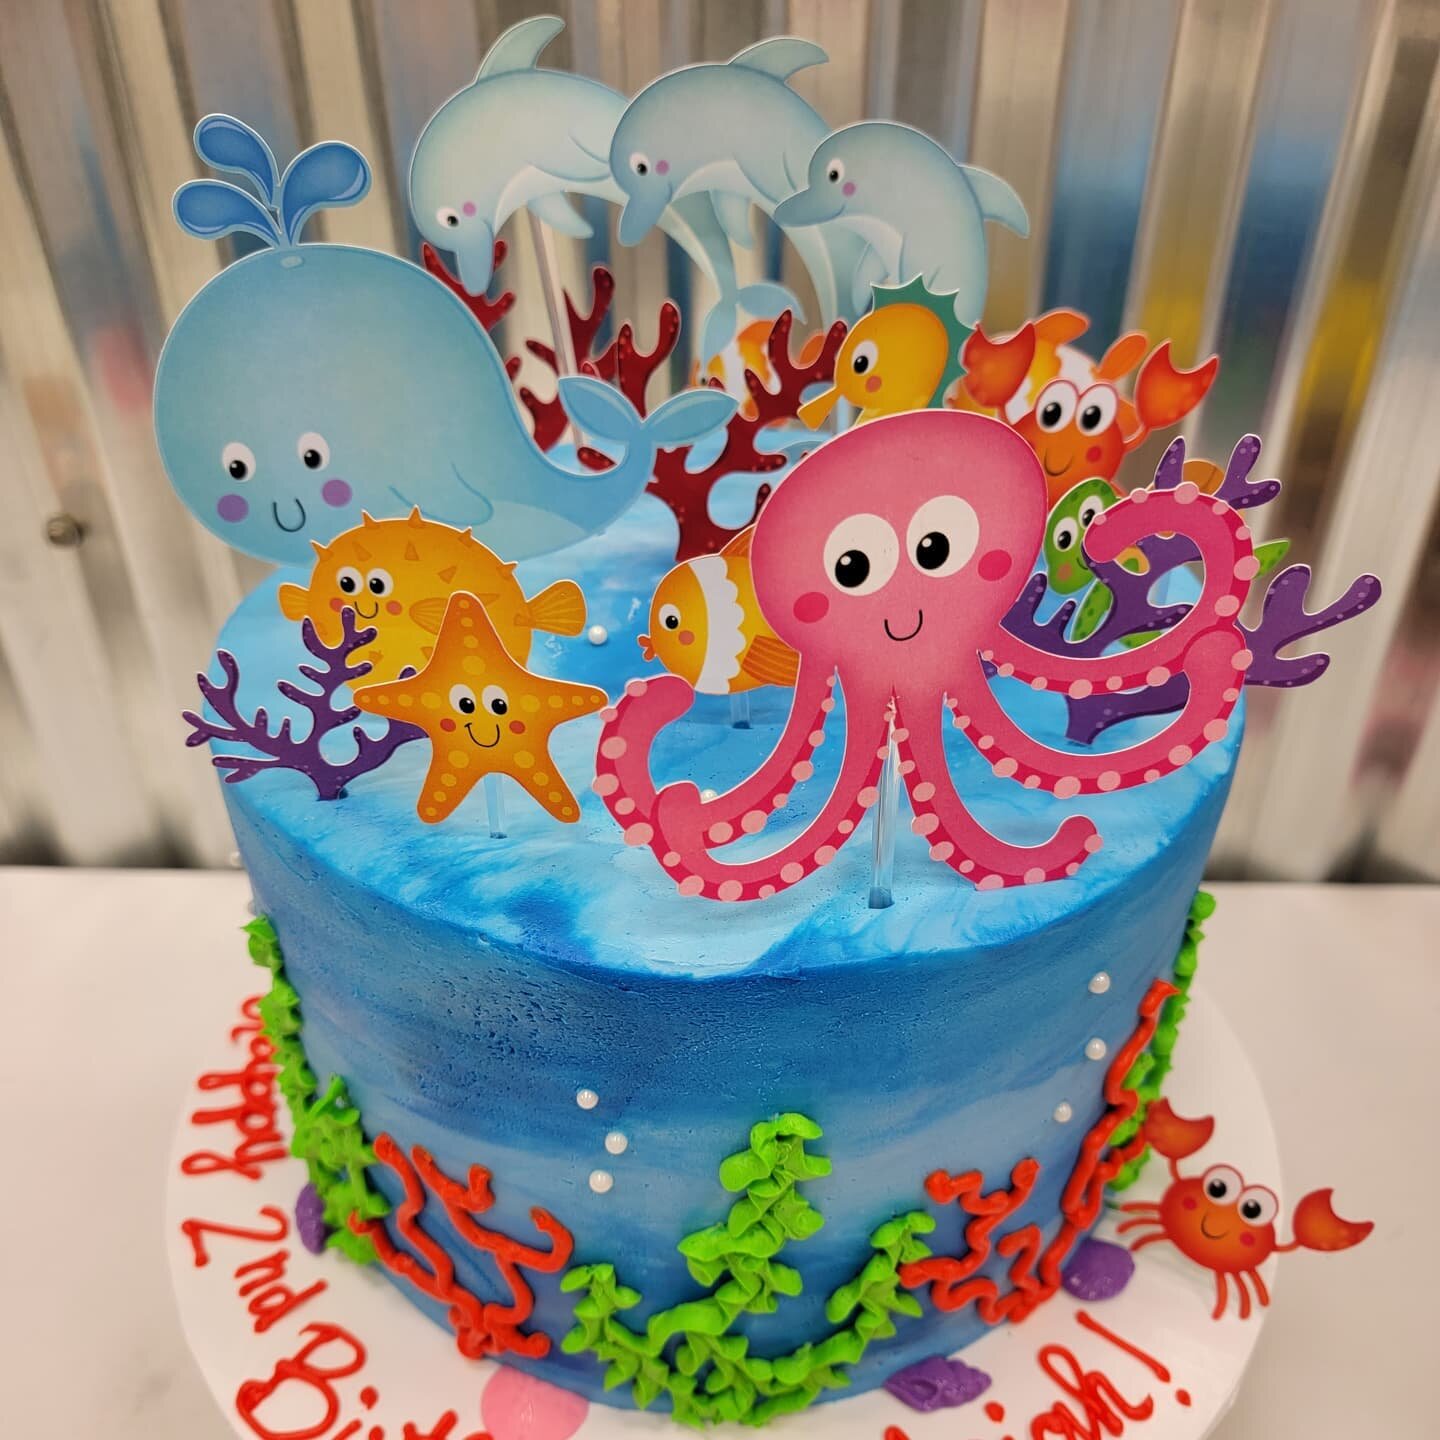 Under the sea birthday cake. So fun!

#sweetnessinyourlife #bestcakeson30a #birthdaycakes #cakesofinstagram #customcaketoppers #seagroveplaza #southwalton #30alocalbusiness #madefromscratch #madewithlove #sweeton30a